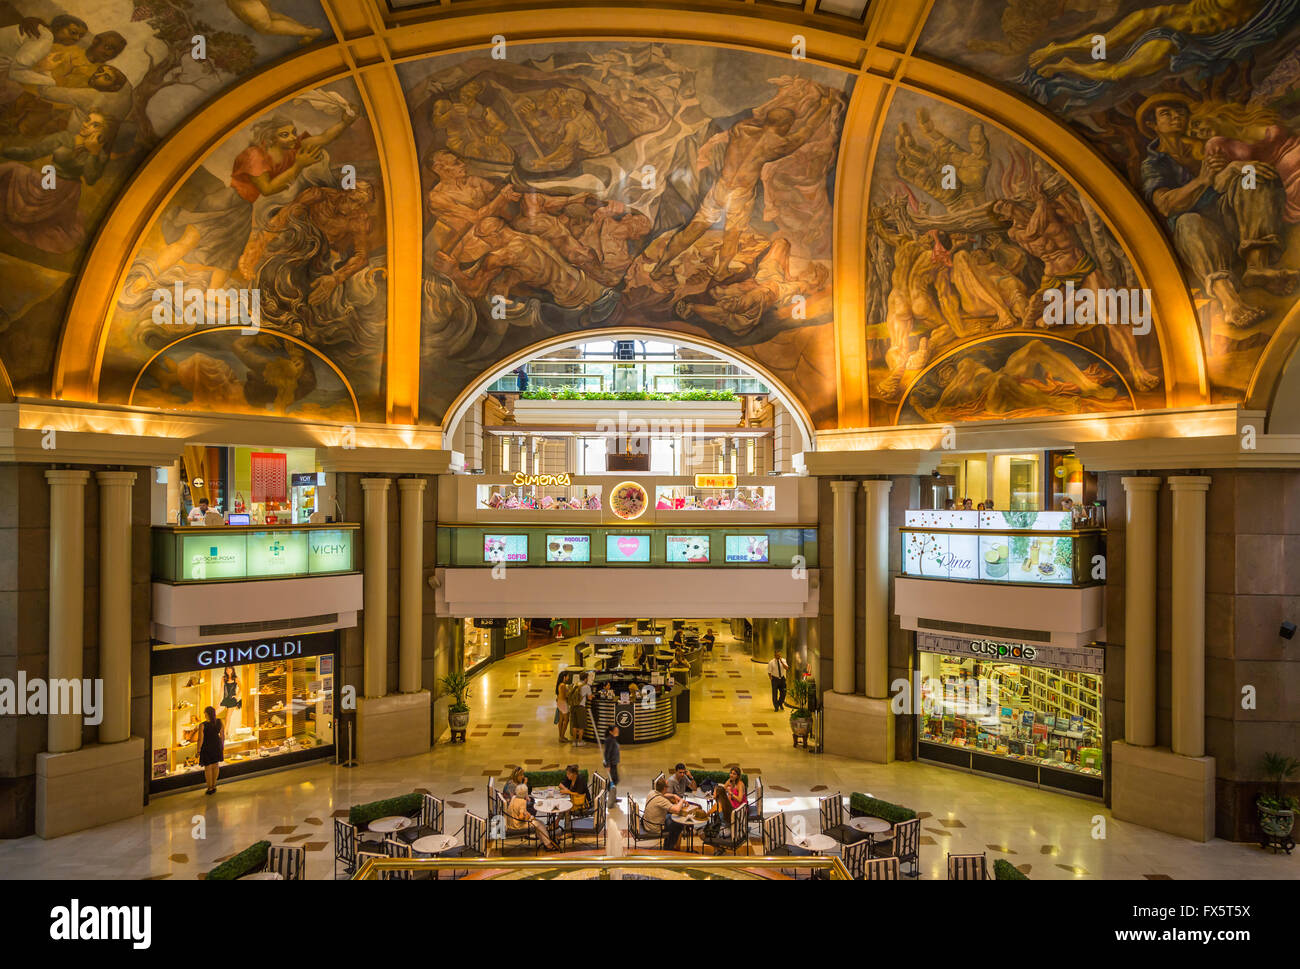 Das Innere des Galerias Pacifico Shopping Mall in Florida Straße in Buenos Aires, Argentinien, Südamerika. Stockfoto